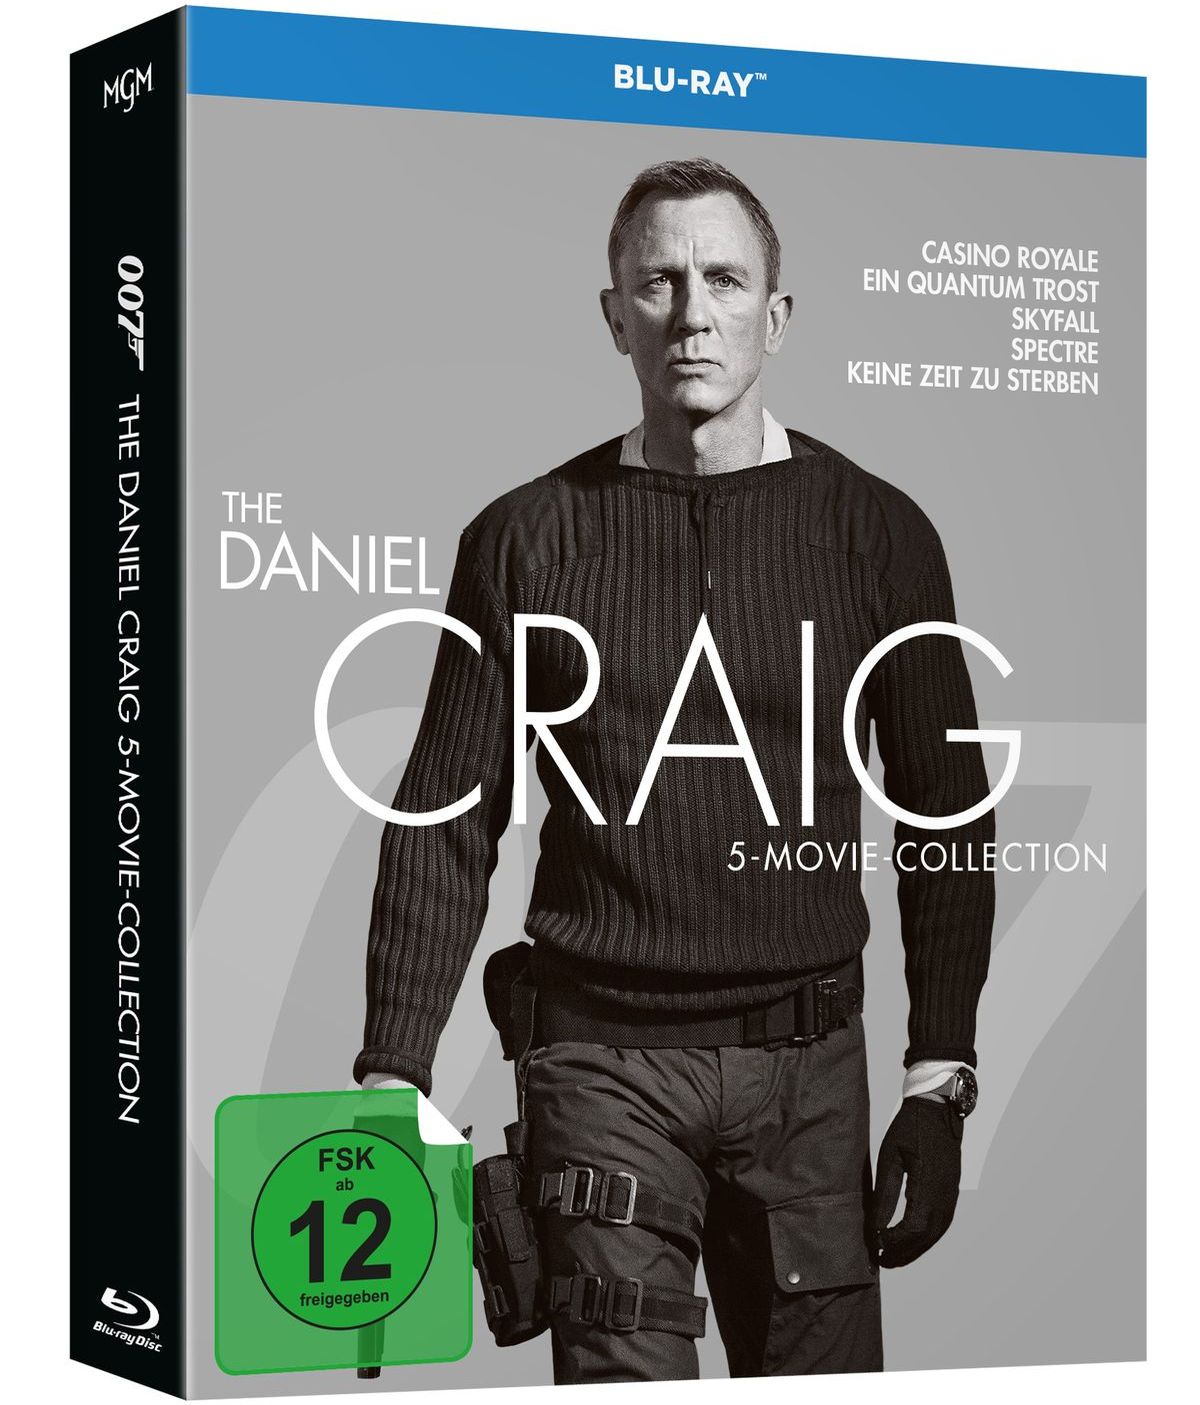 The Daniel Craig 5-Movie Collection (James Bond)